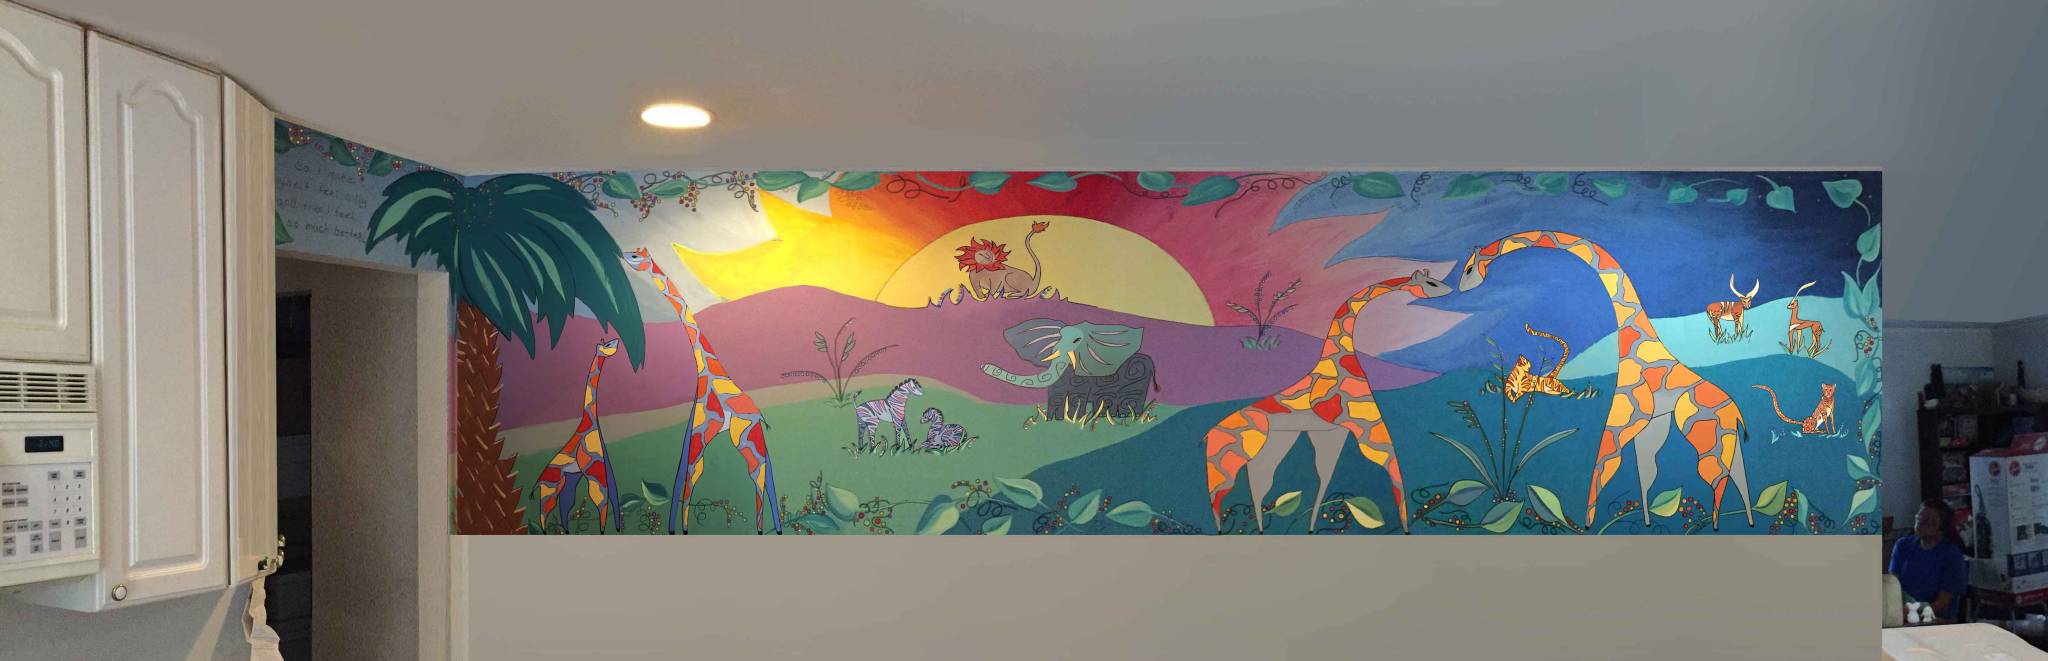 Original Wall Mural – Jungle Theme